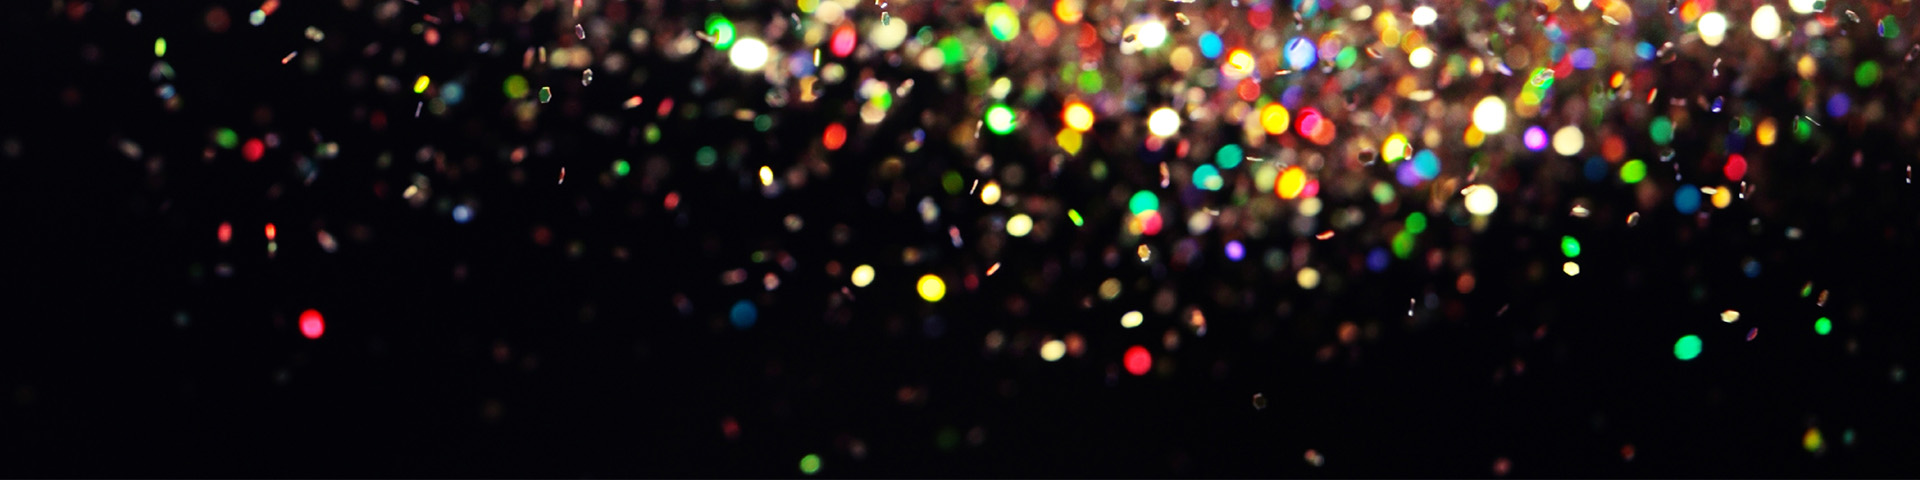 glitter sprinkles on black background